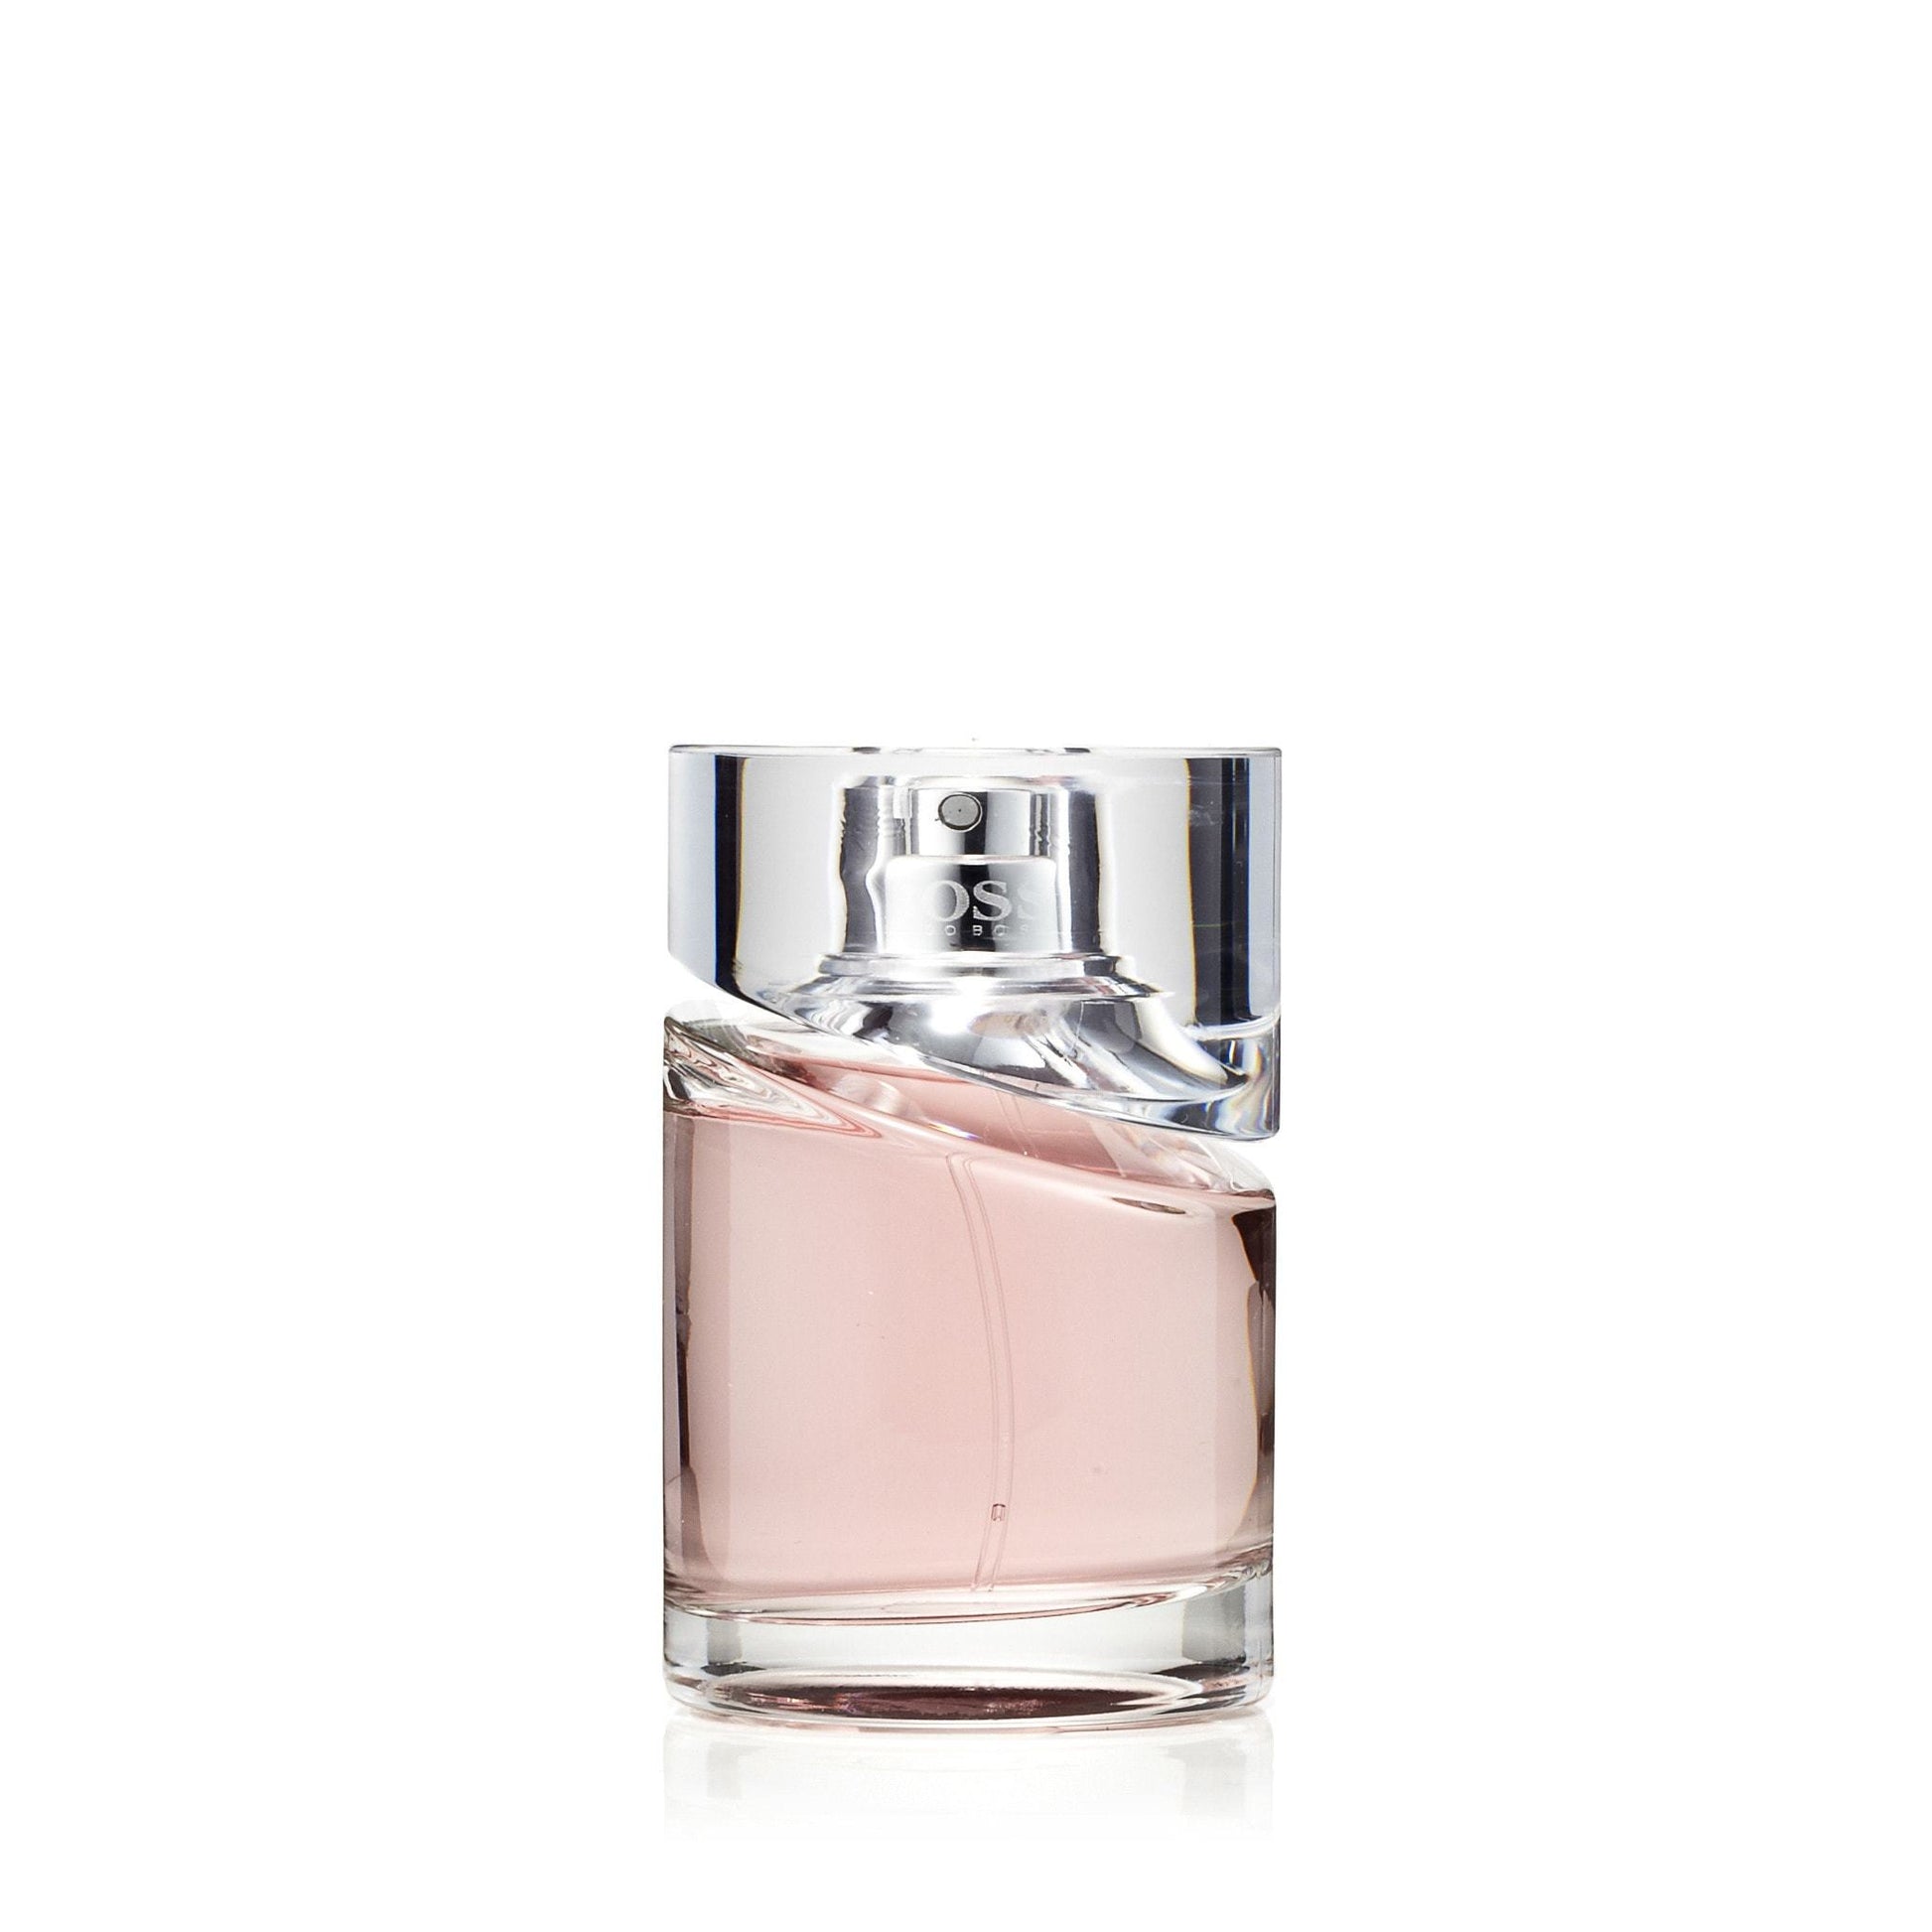 Femme Eau de Parfum Spray for Women by Hugo Boss, Product image 2